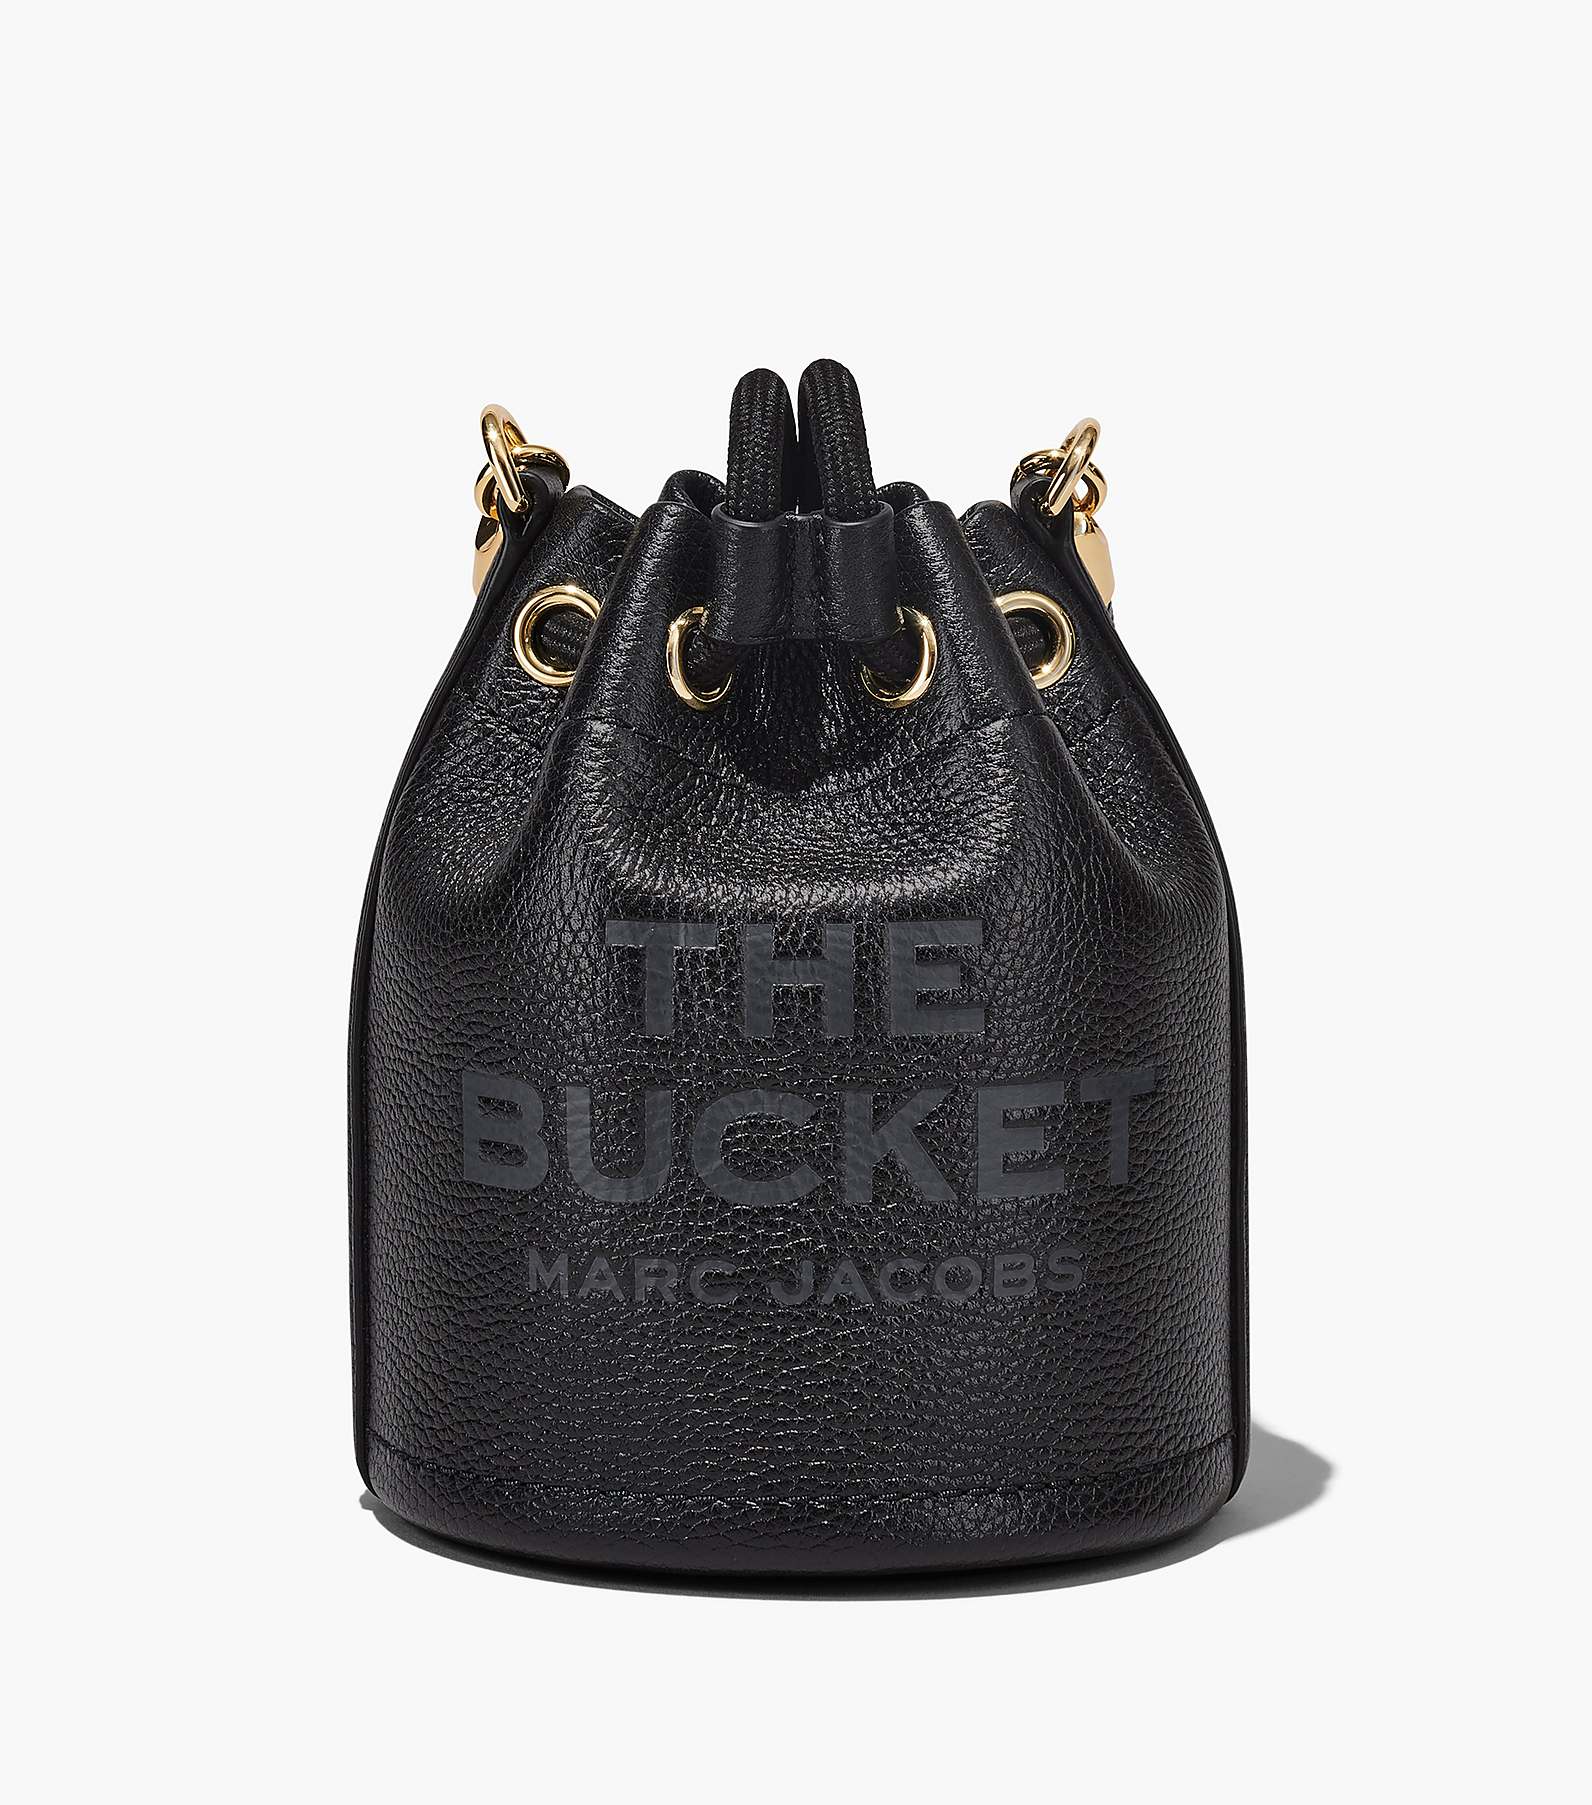 The Leather Micro Bucket Bag(The Bucket)